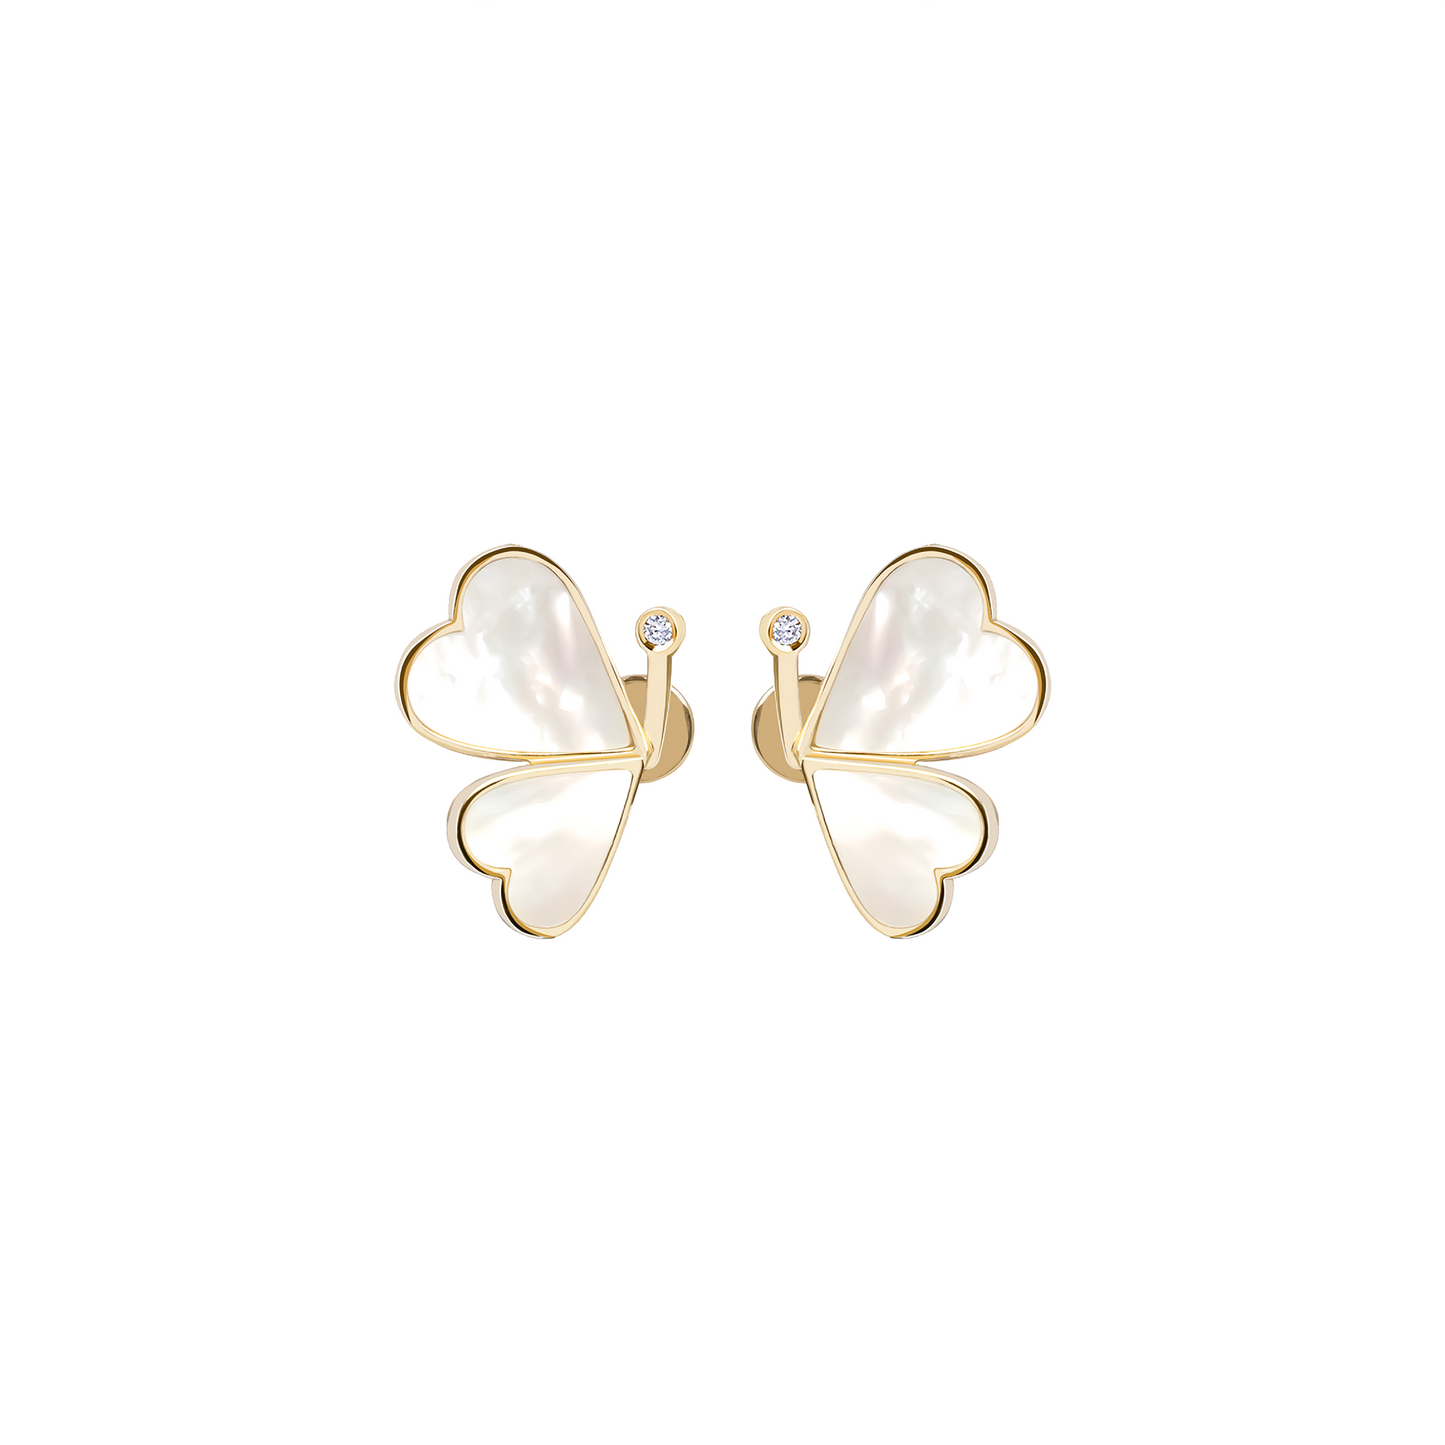 Butterfly Earrings, Front View